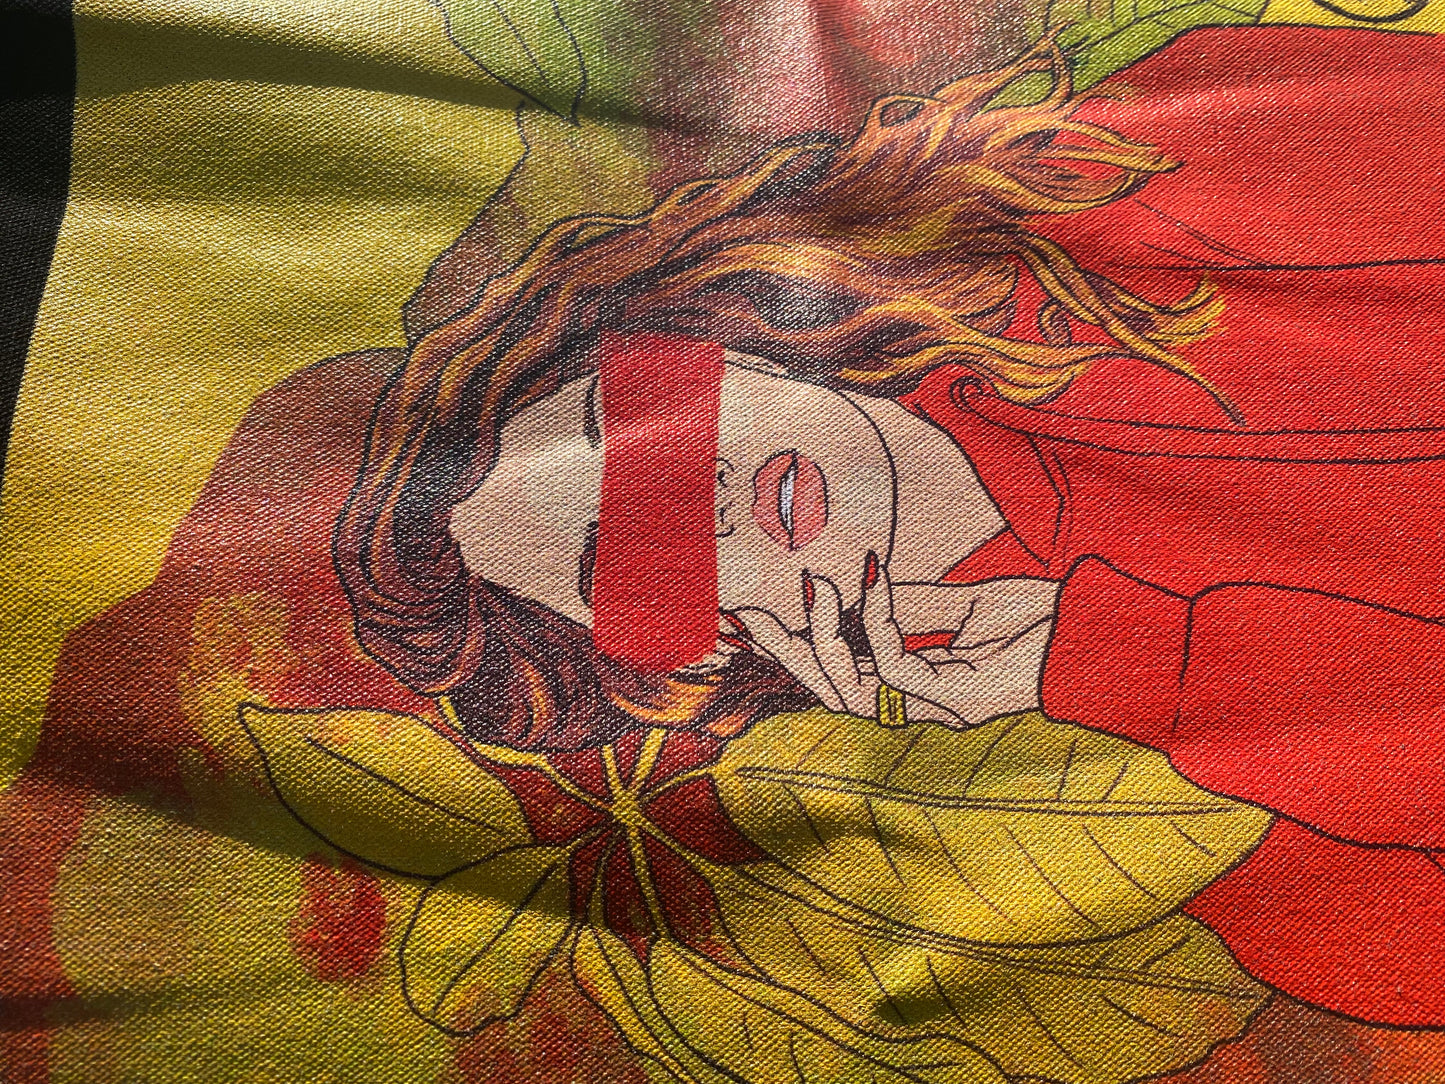 MIA Digital Art tote bag from Leonora, print it on a fine sweatshirt in good quality! Reggae and Dancehall Art prints!